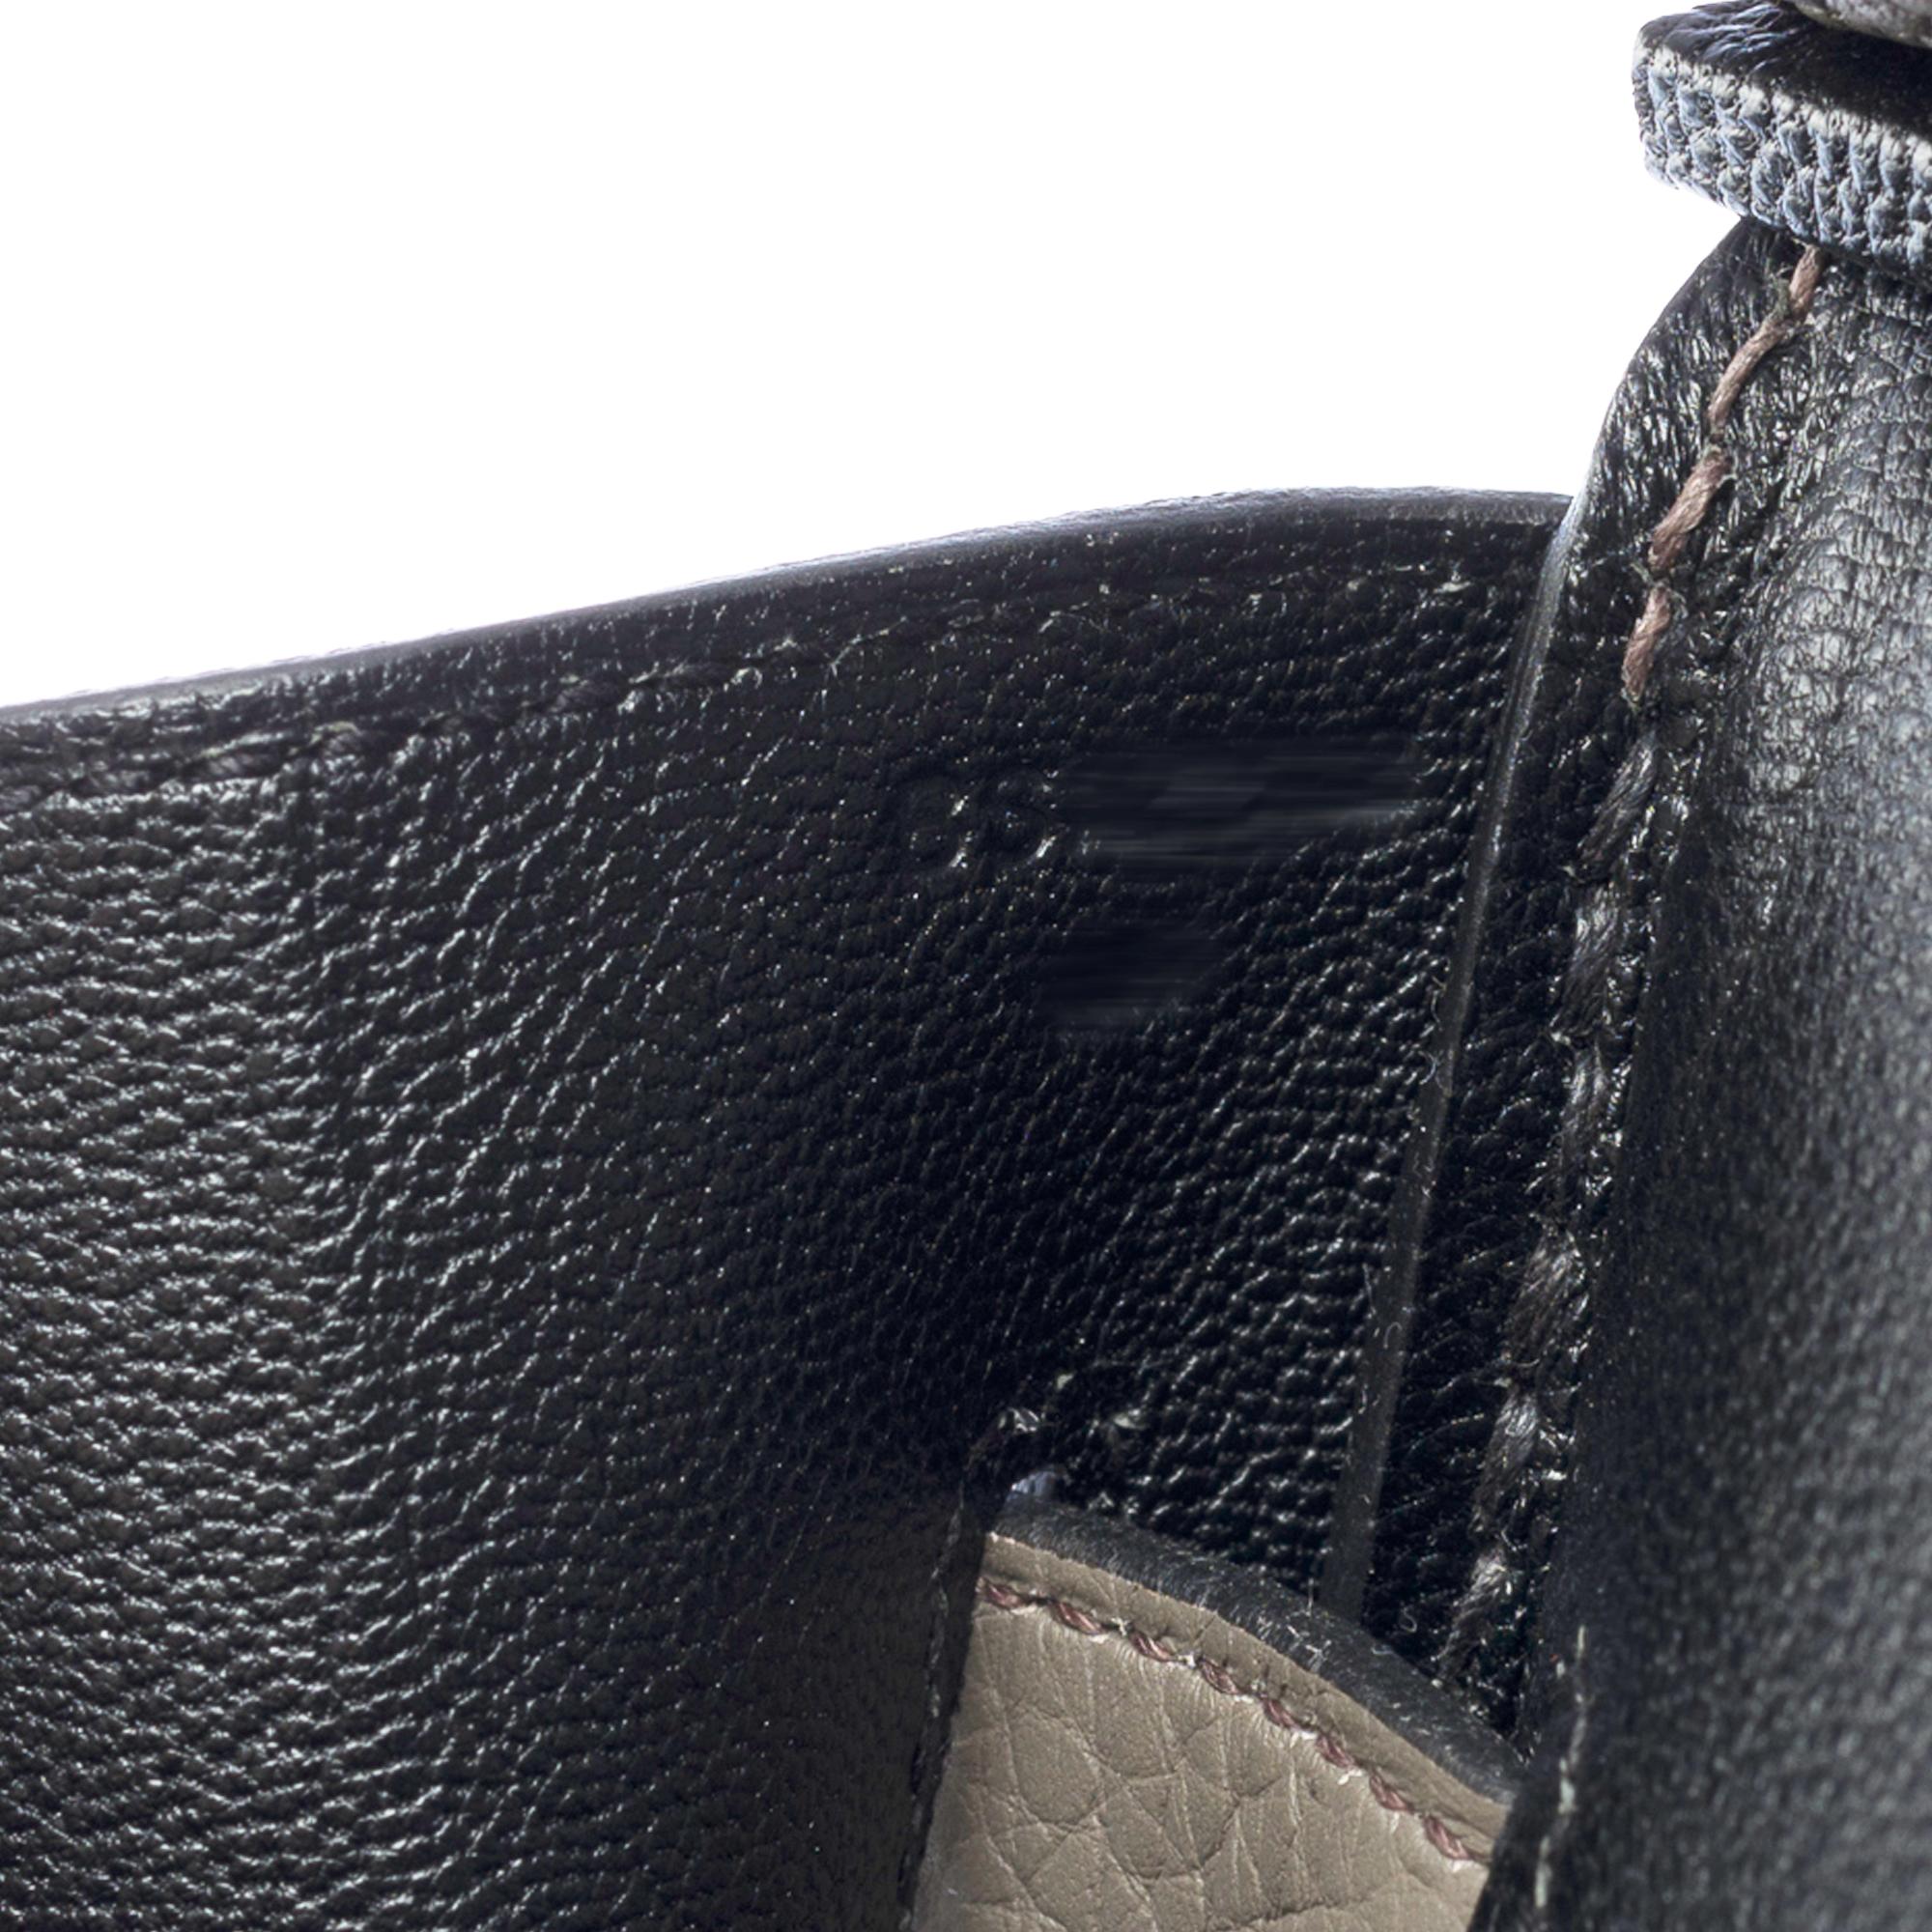 Rare Hermès Birkin 35 HSS (Special Order) handbag in Etain Togo leather, SHW 4